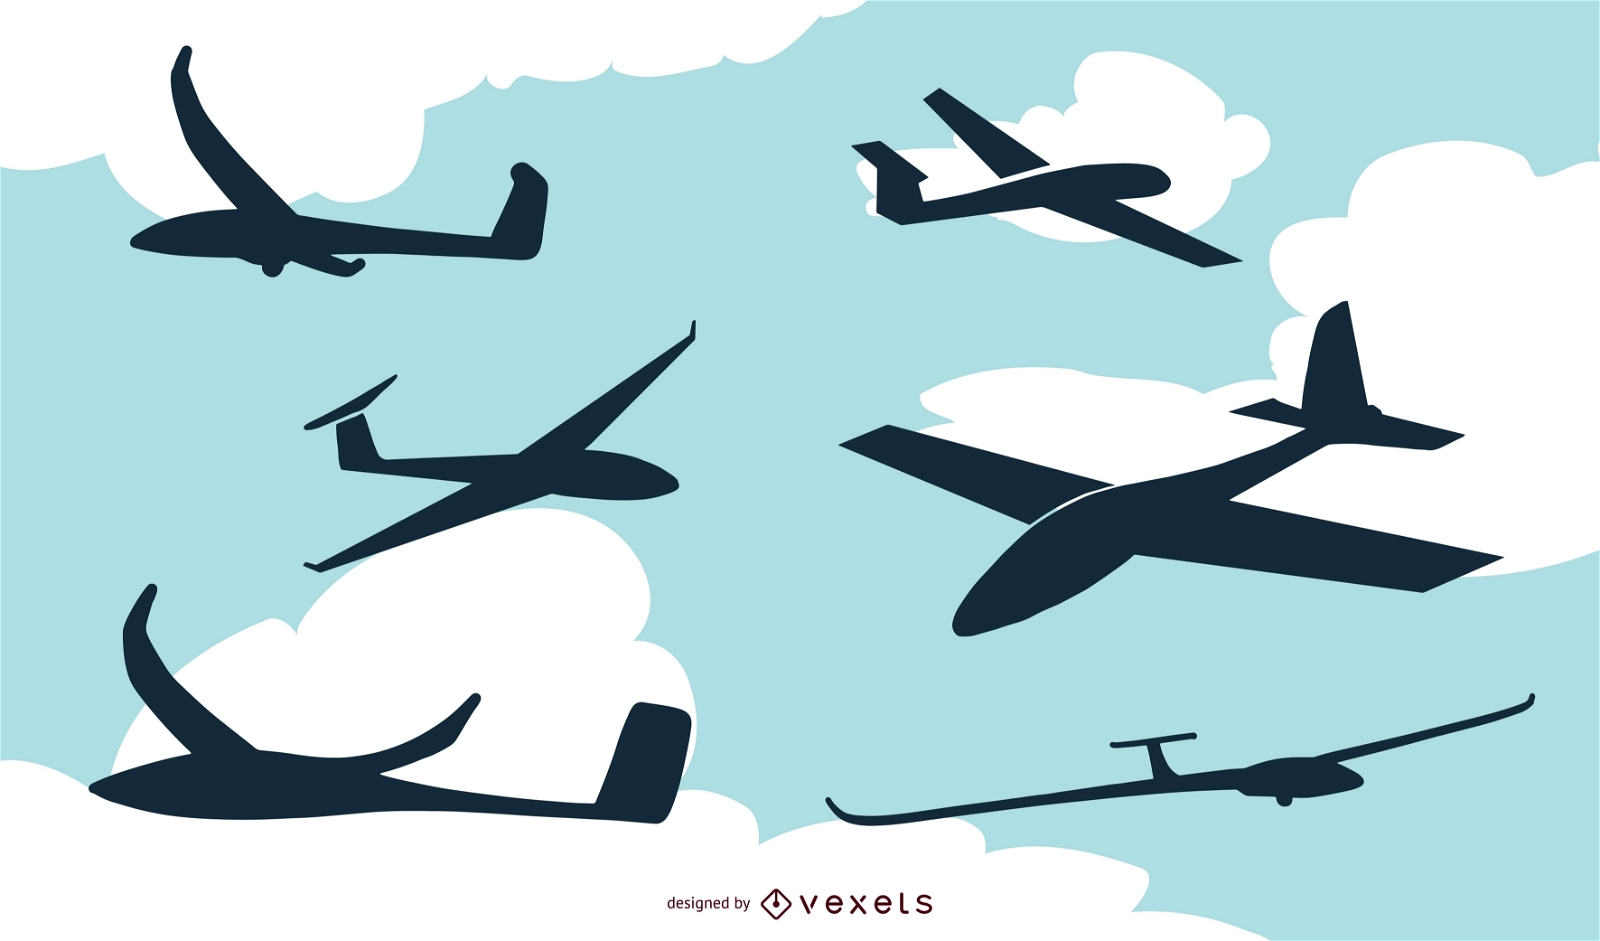 Flugzeugschattenbild-Illustrationssatz